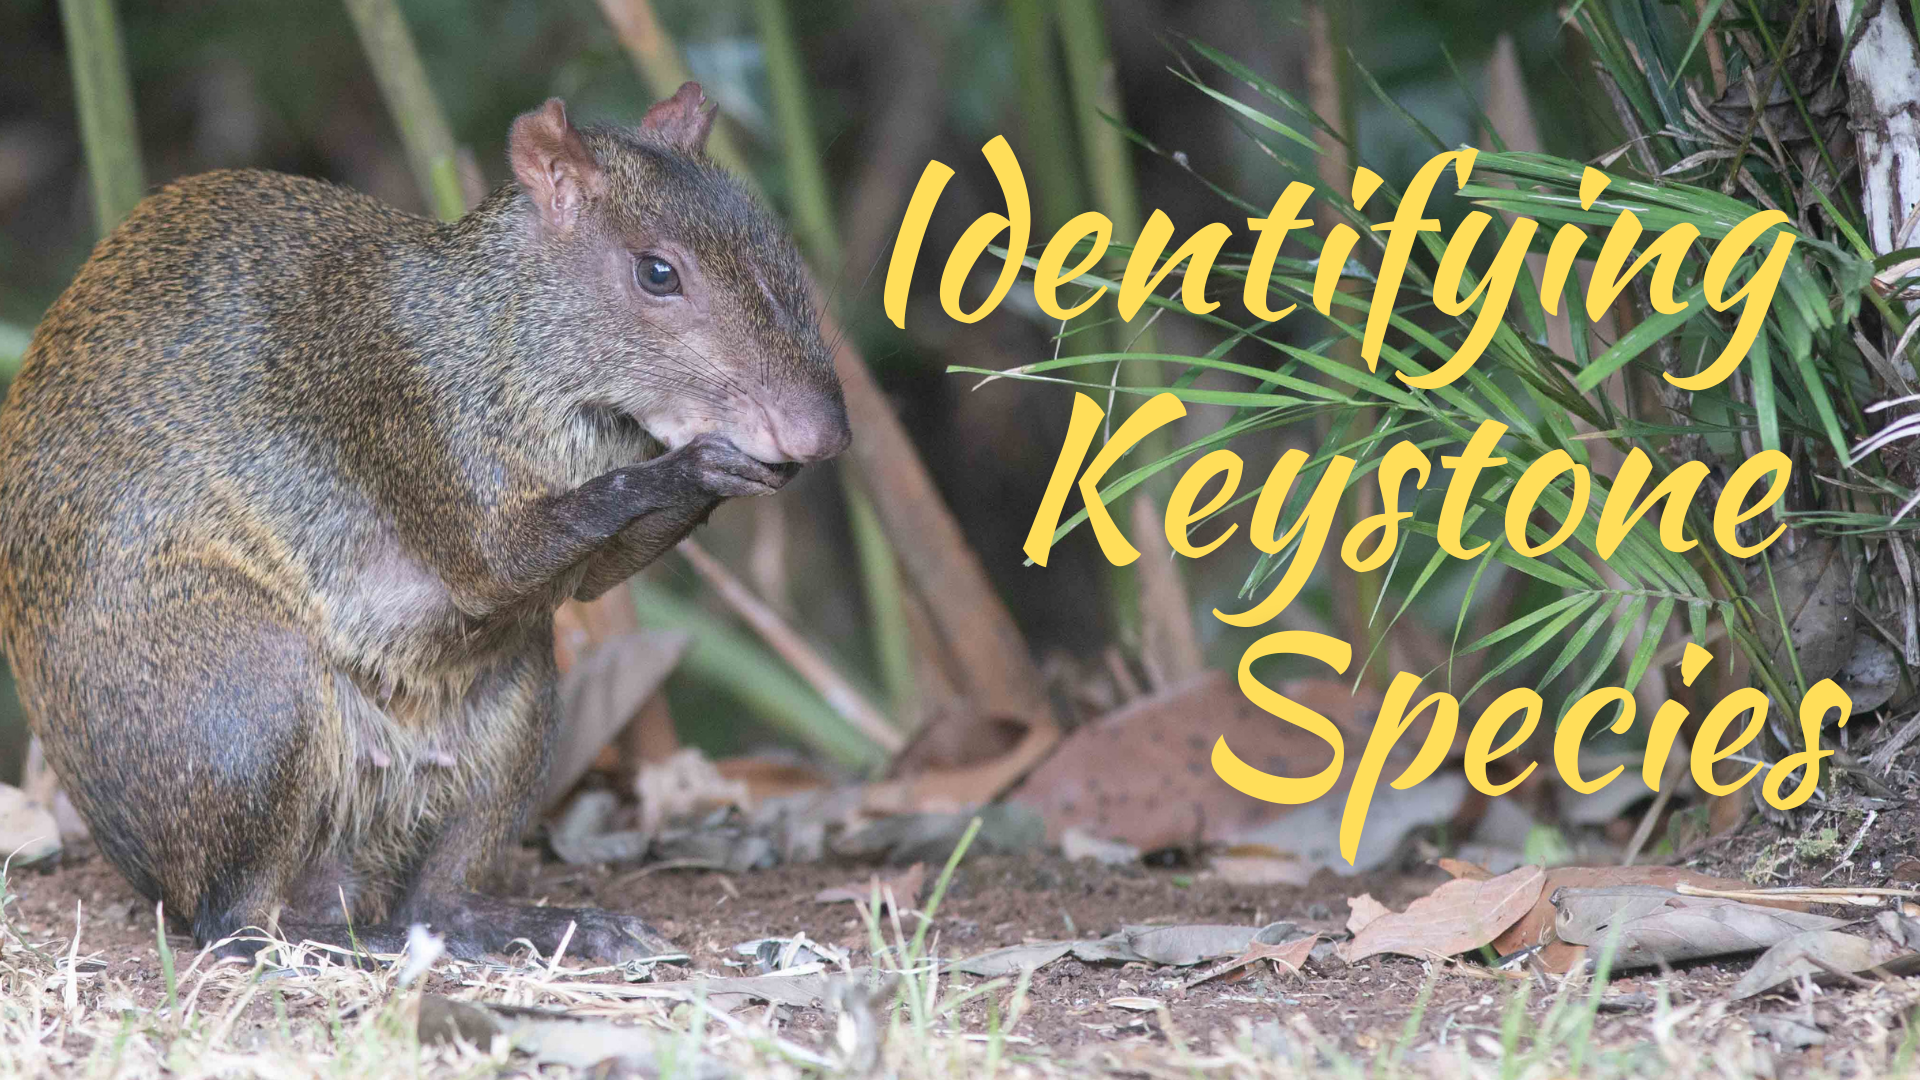 Identifying Keystone Species Educational Video